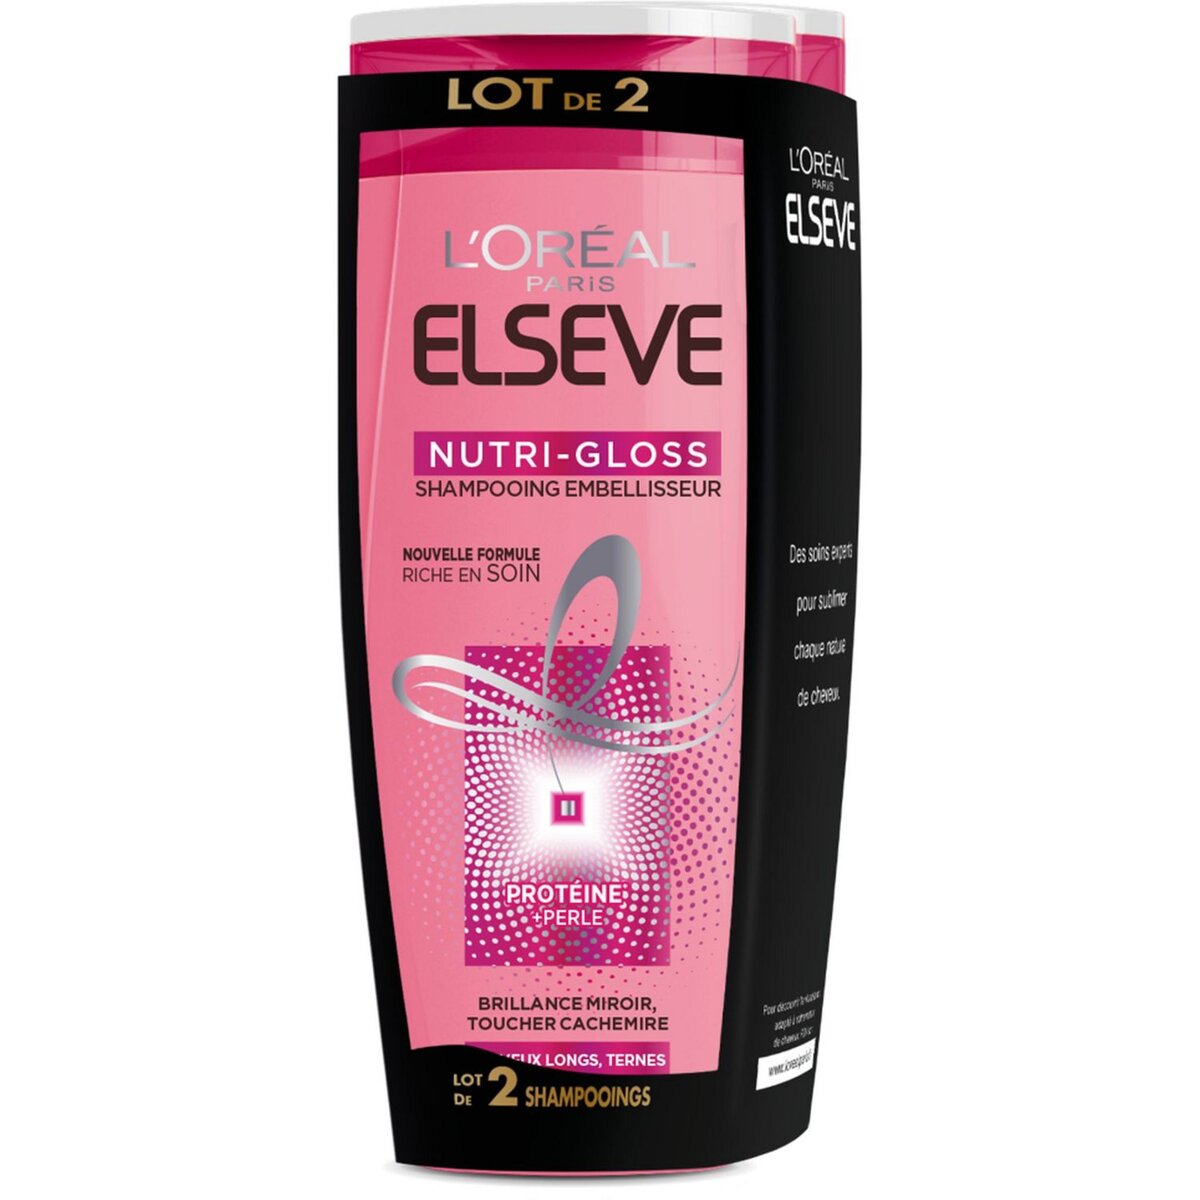 ELSEVE Nutri-Gloss shampooing embellisseur cheveux longs, ternes 2x200ml